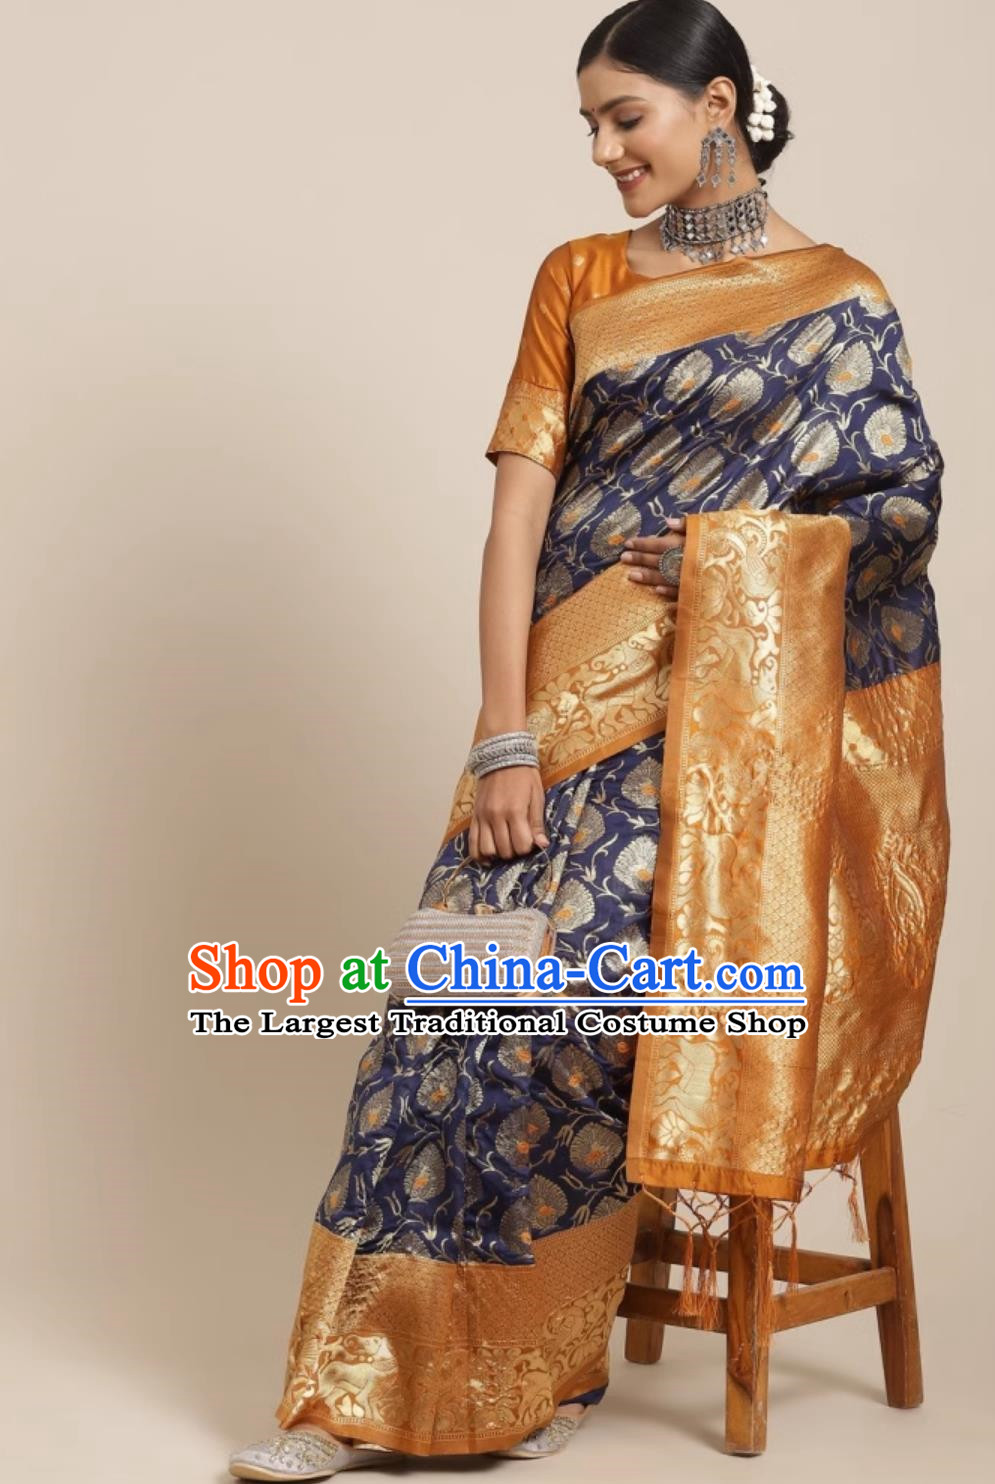 India Festival Clothing National Costume Traditional Dark Blue Dress Indian Woman Sari